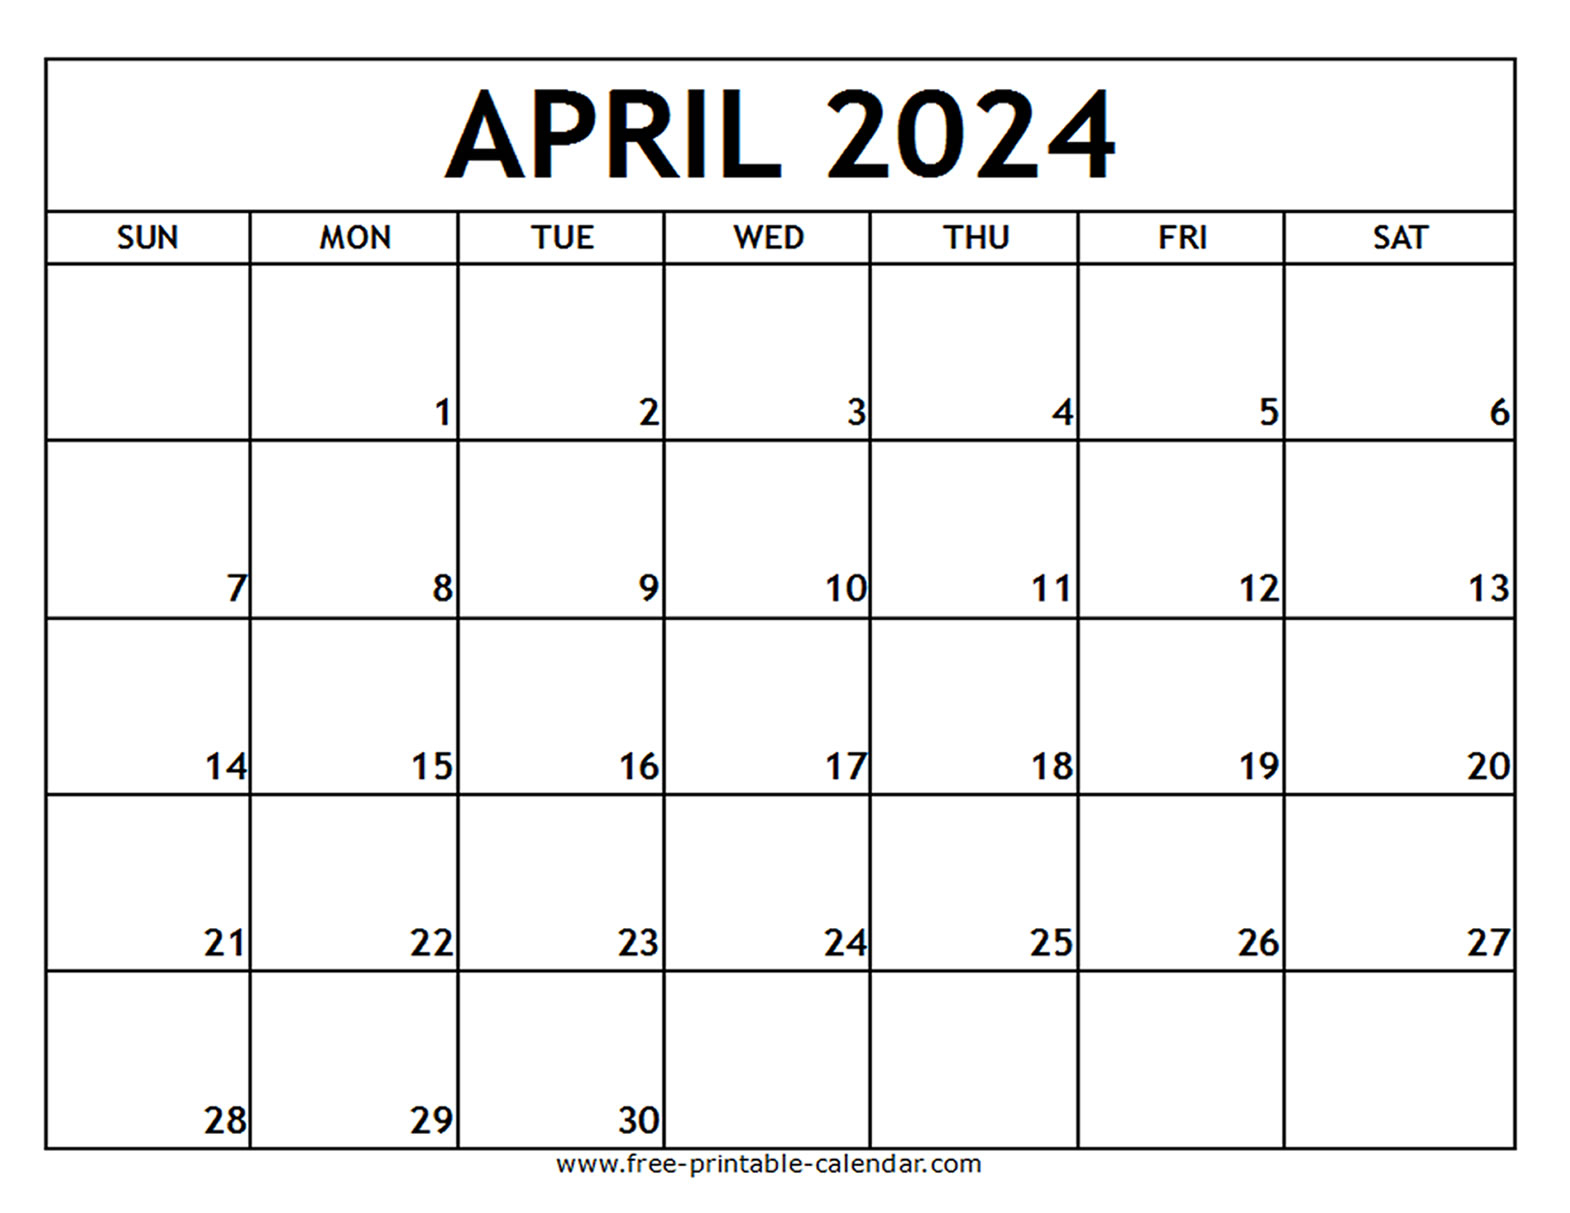 April 2024 Printable Calendar - Free-Printable-Calendar for Print April 2024 Calendar